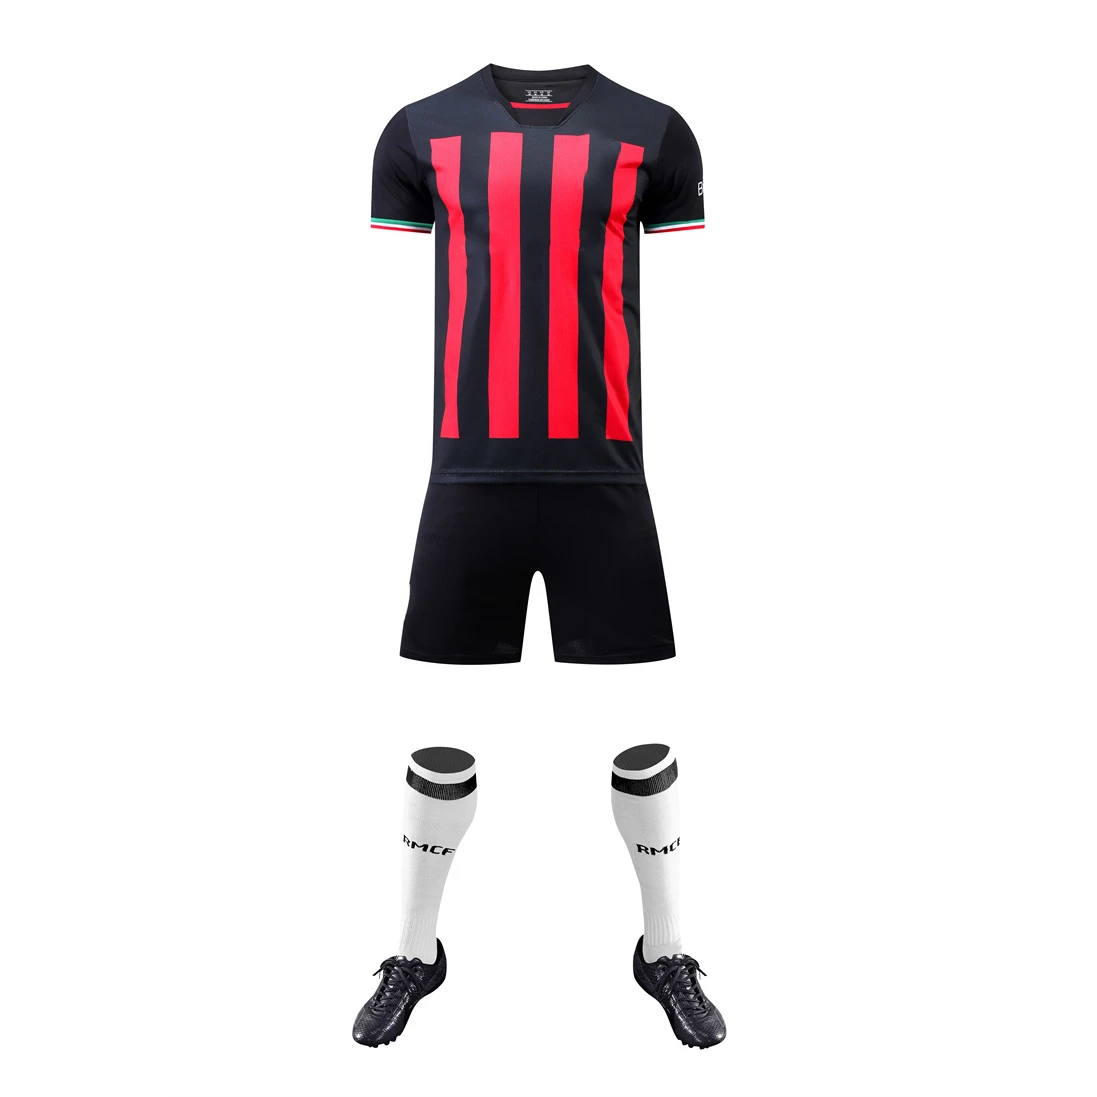 Soccer wear Sets Sublimation Logo Soccer Wear For Men's Practice Shirts Custom made design and size Soccer wear Wholesale